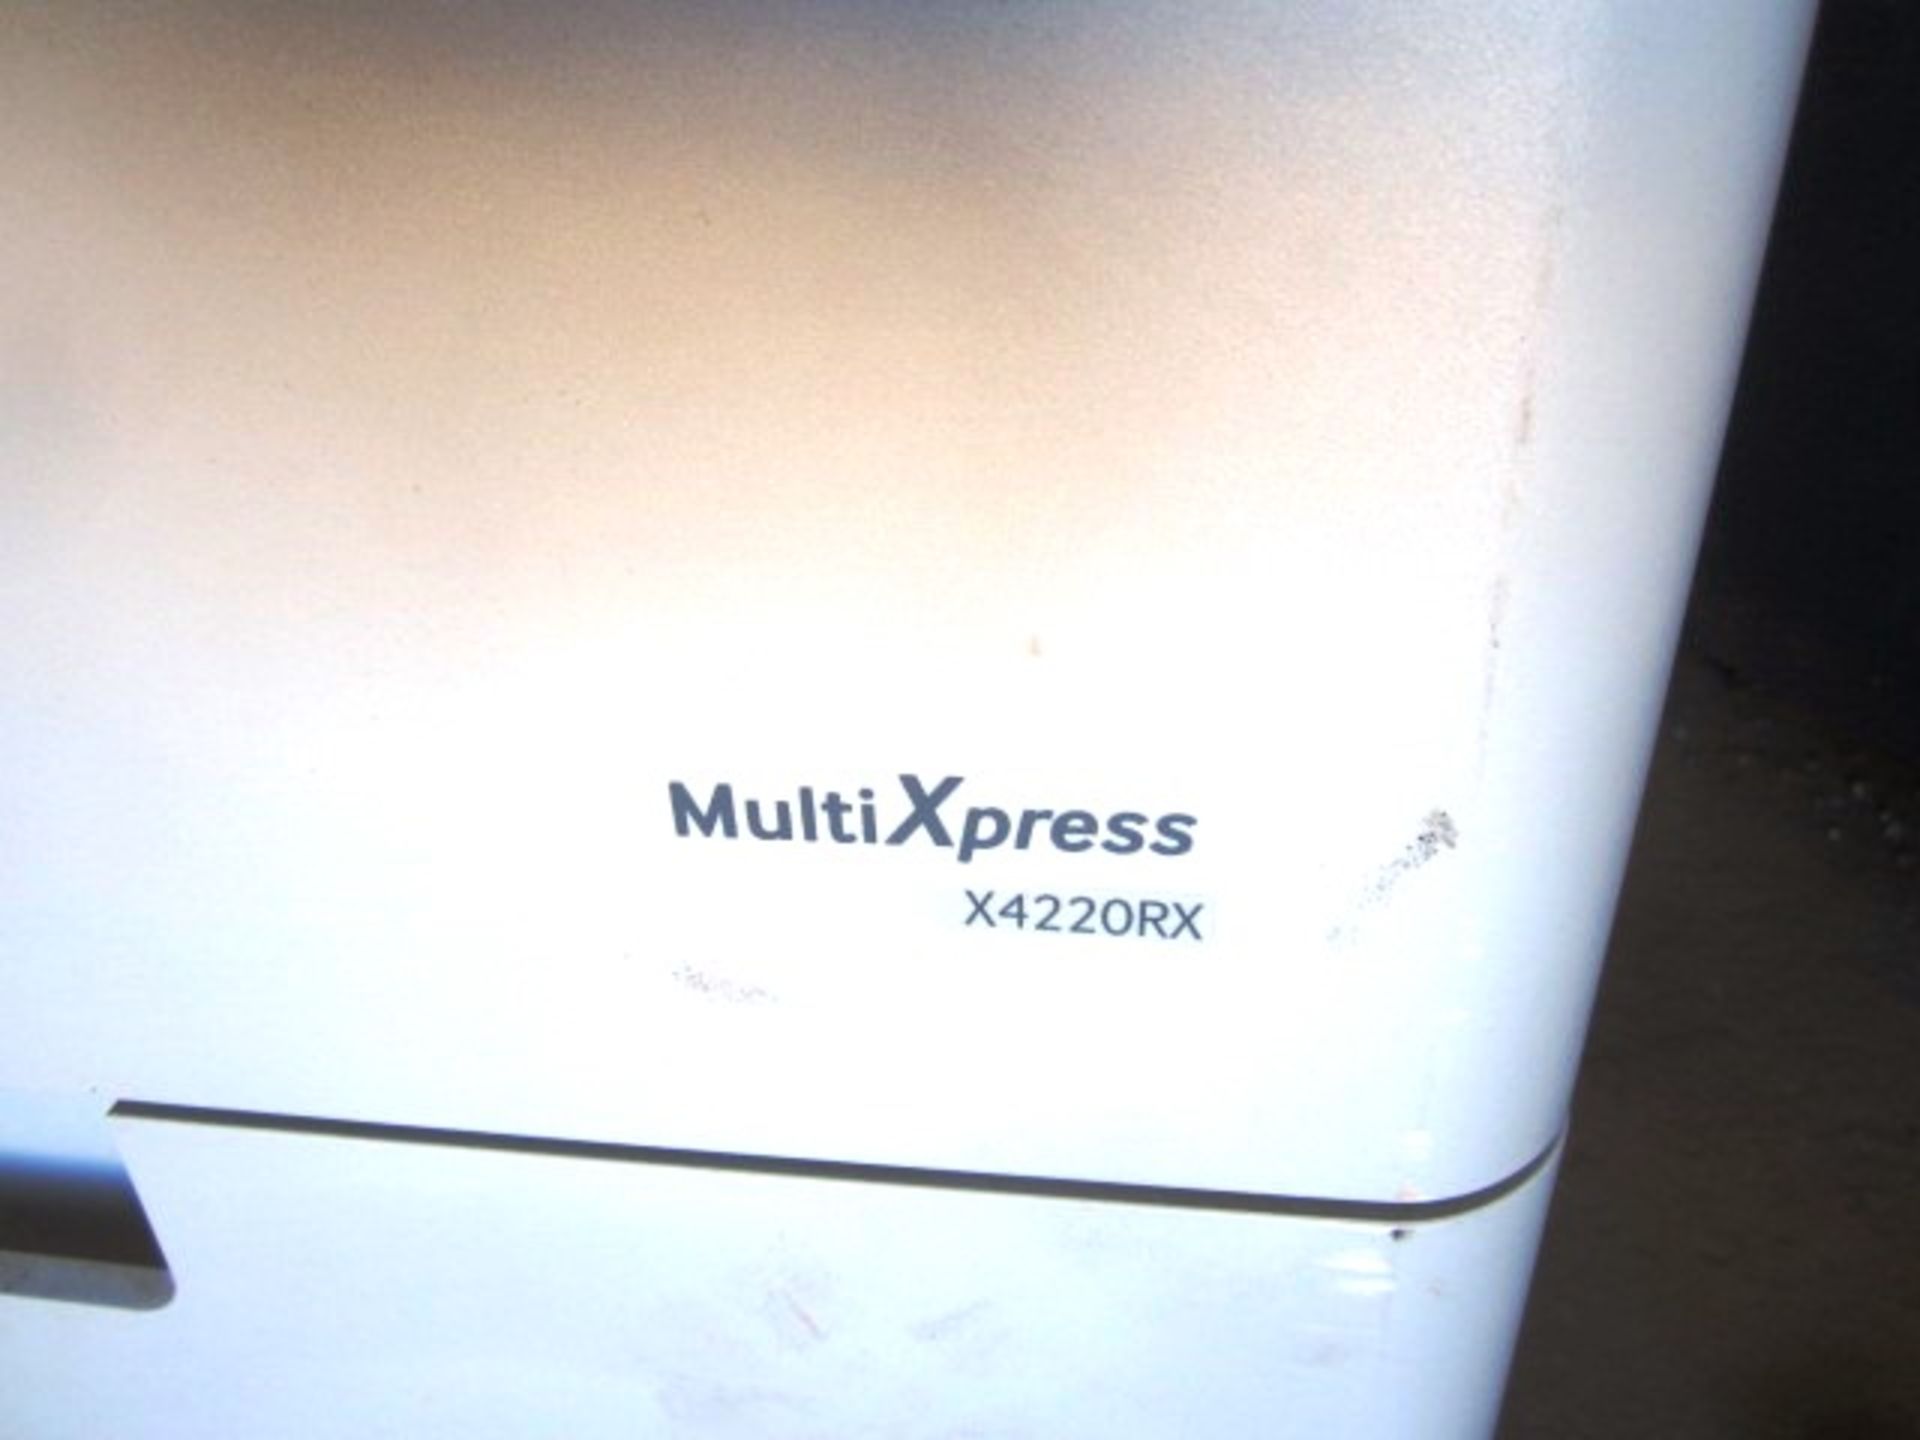 Samsung MultiXpress X422ORX photocopier - Image 3 of 4